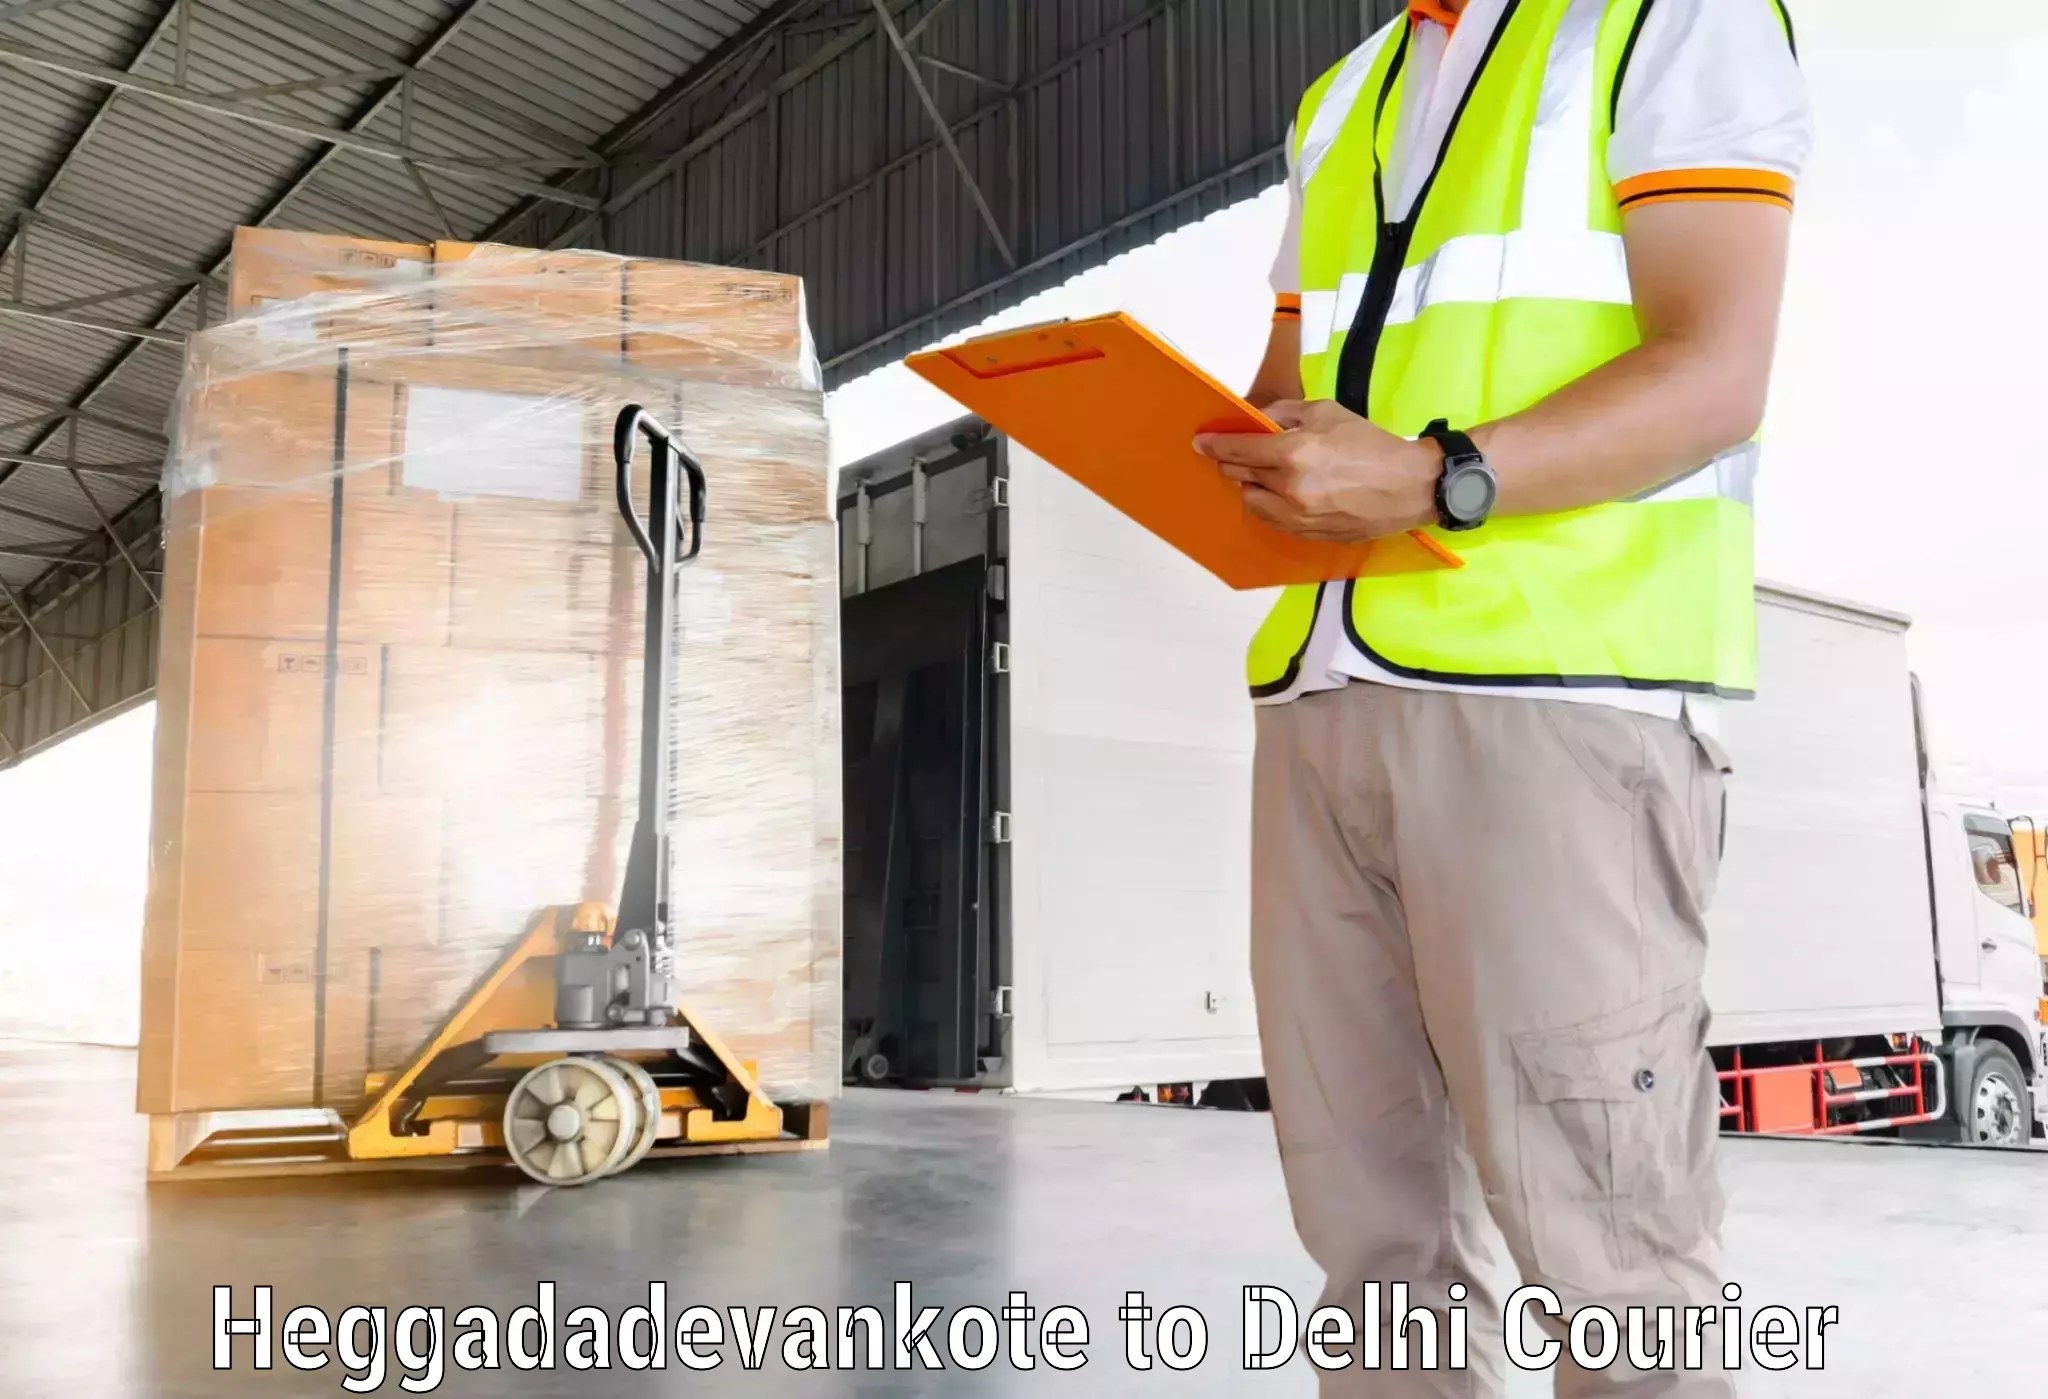 Express delivery capabilities Heggadadevankote to Ramesh Nagar